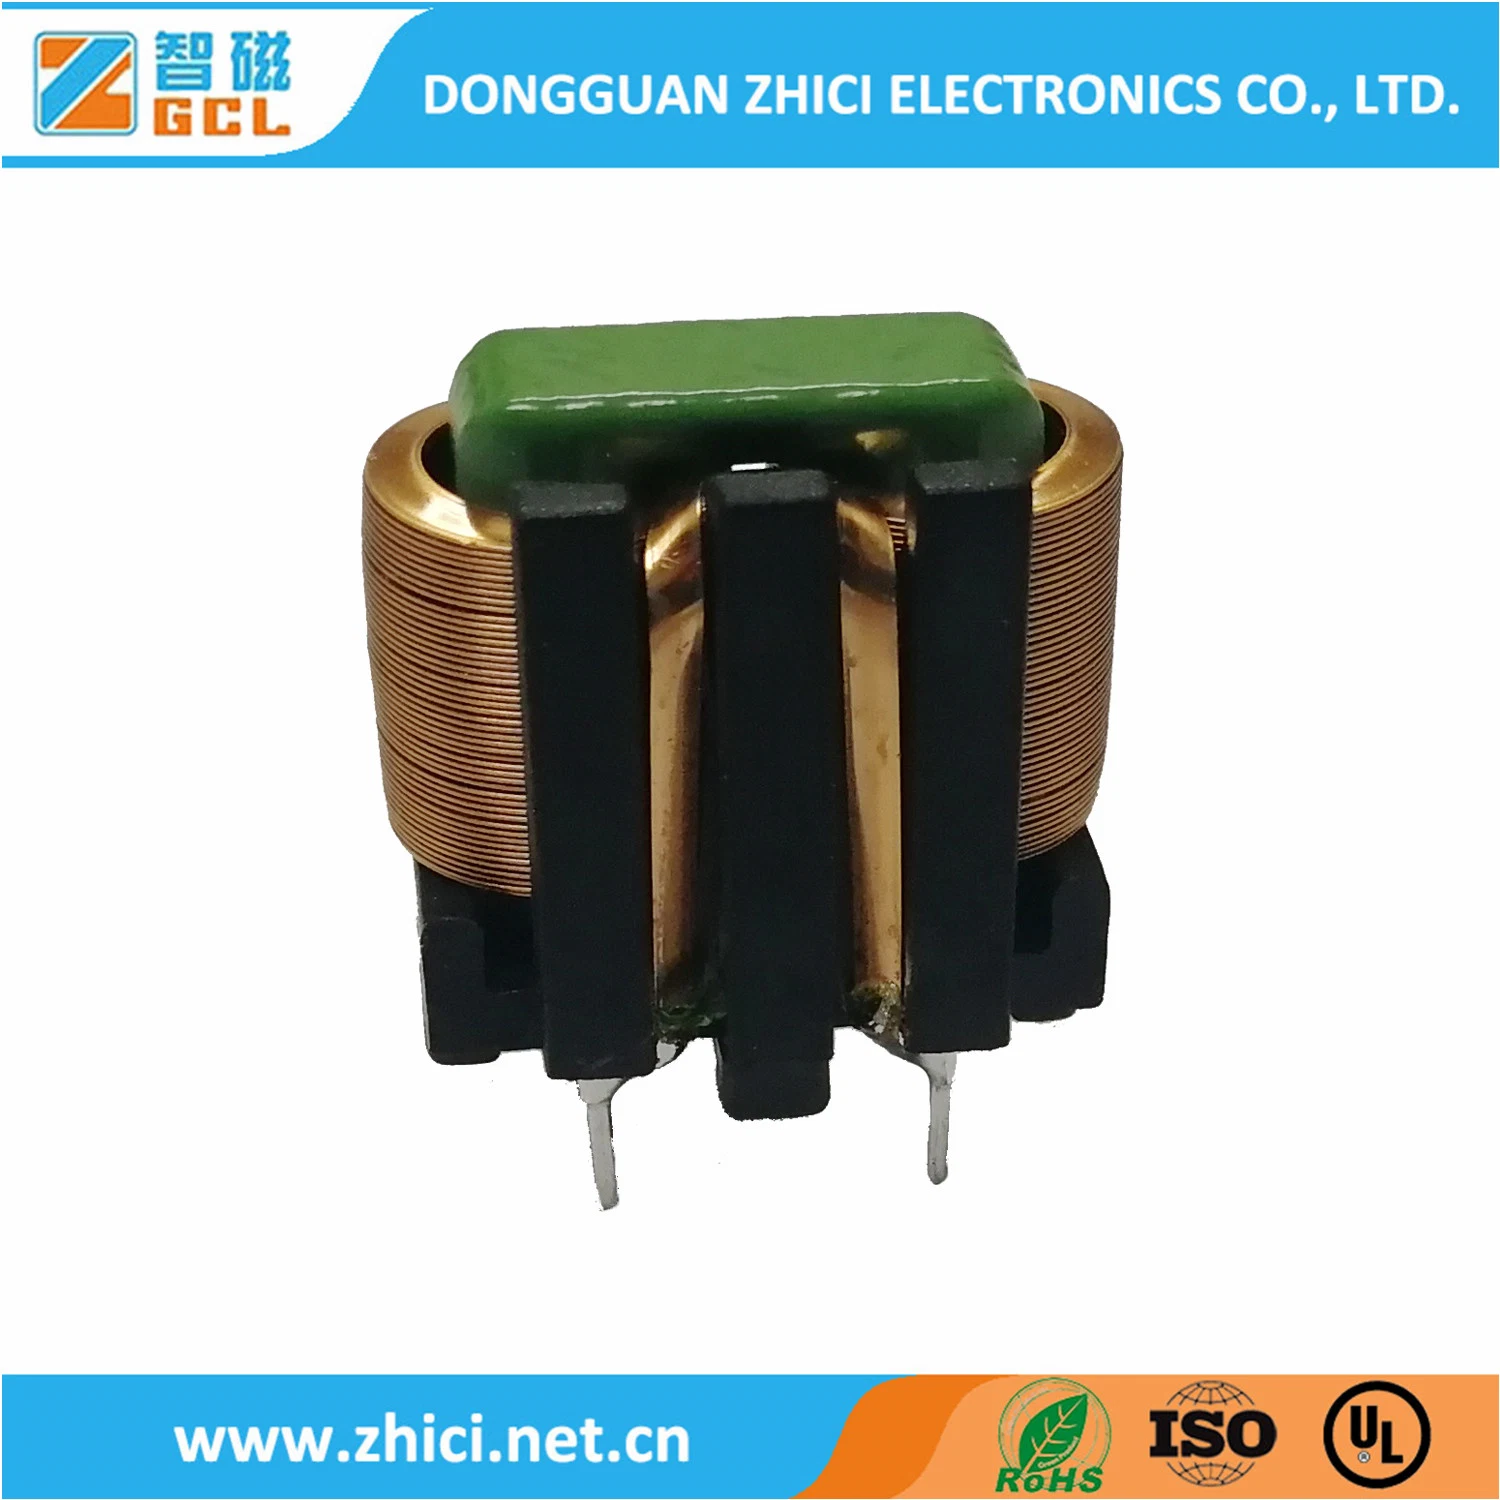 200uh 10A Toroidal Inductor/Choke Ferrite Toroidal Iron Core Inductor Choke Coil for Electronic Control